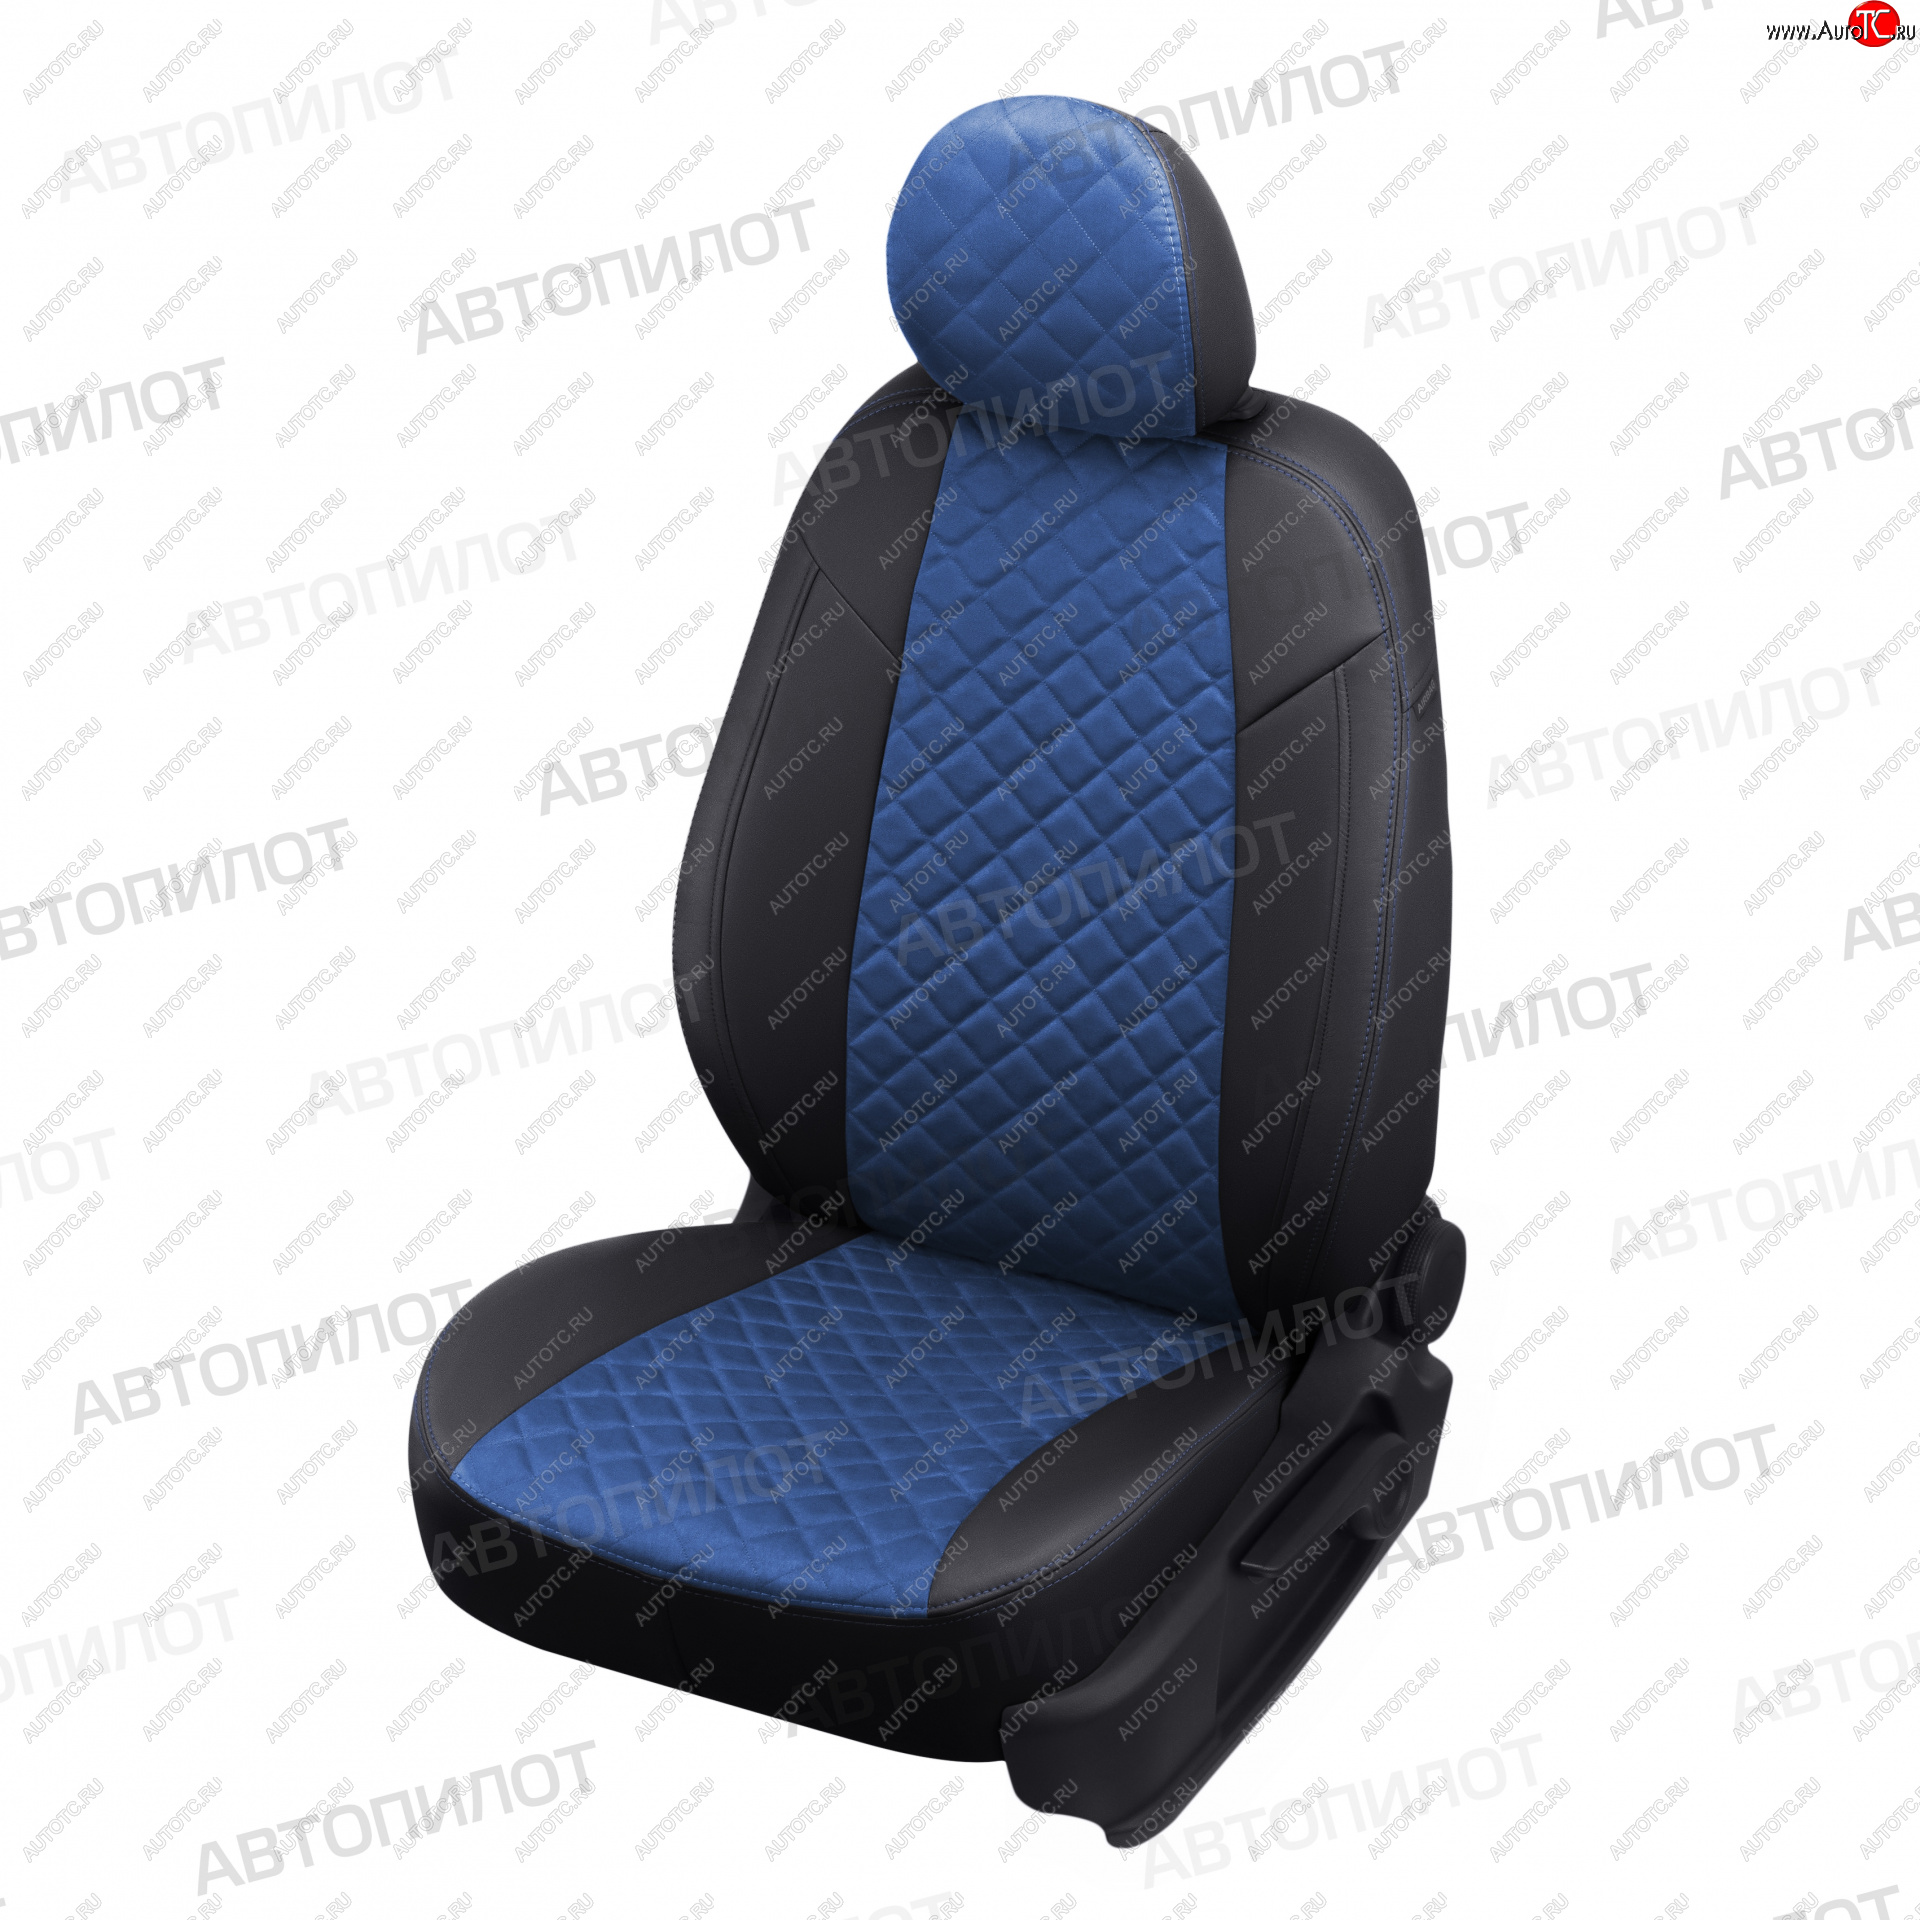 13 999 р. Чехлы сидений (5 мест, экокожа) Автопилот Ромб  Ford Galaxy  WGR (1995-2006) (черный/синий)